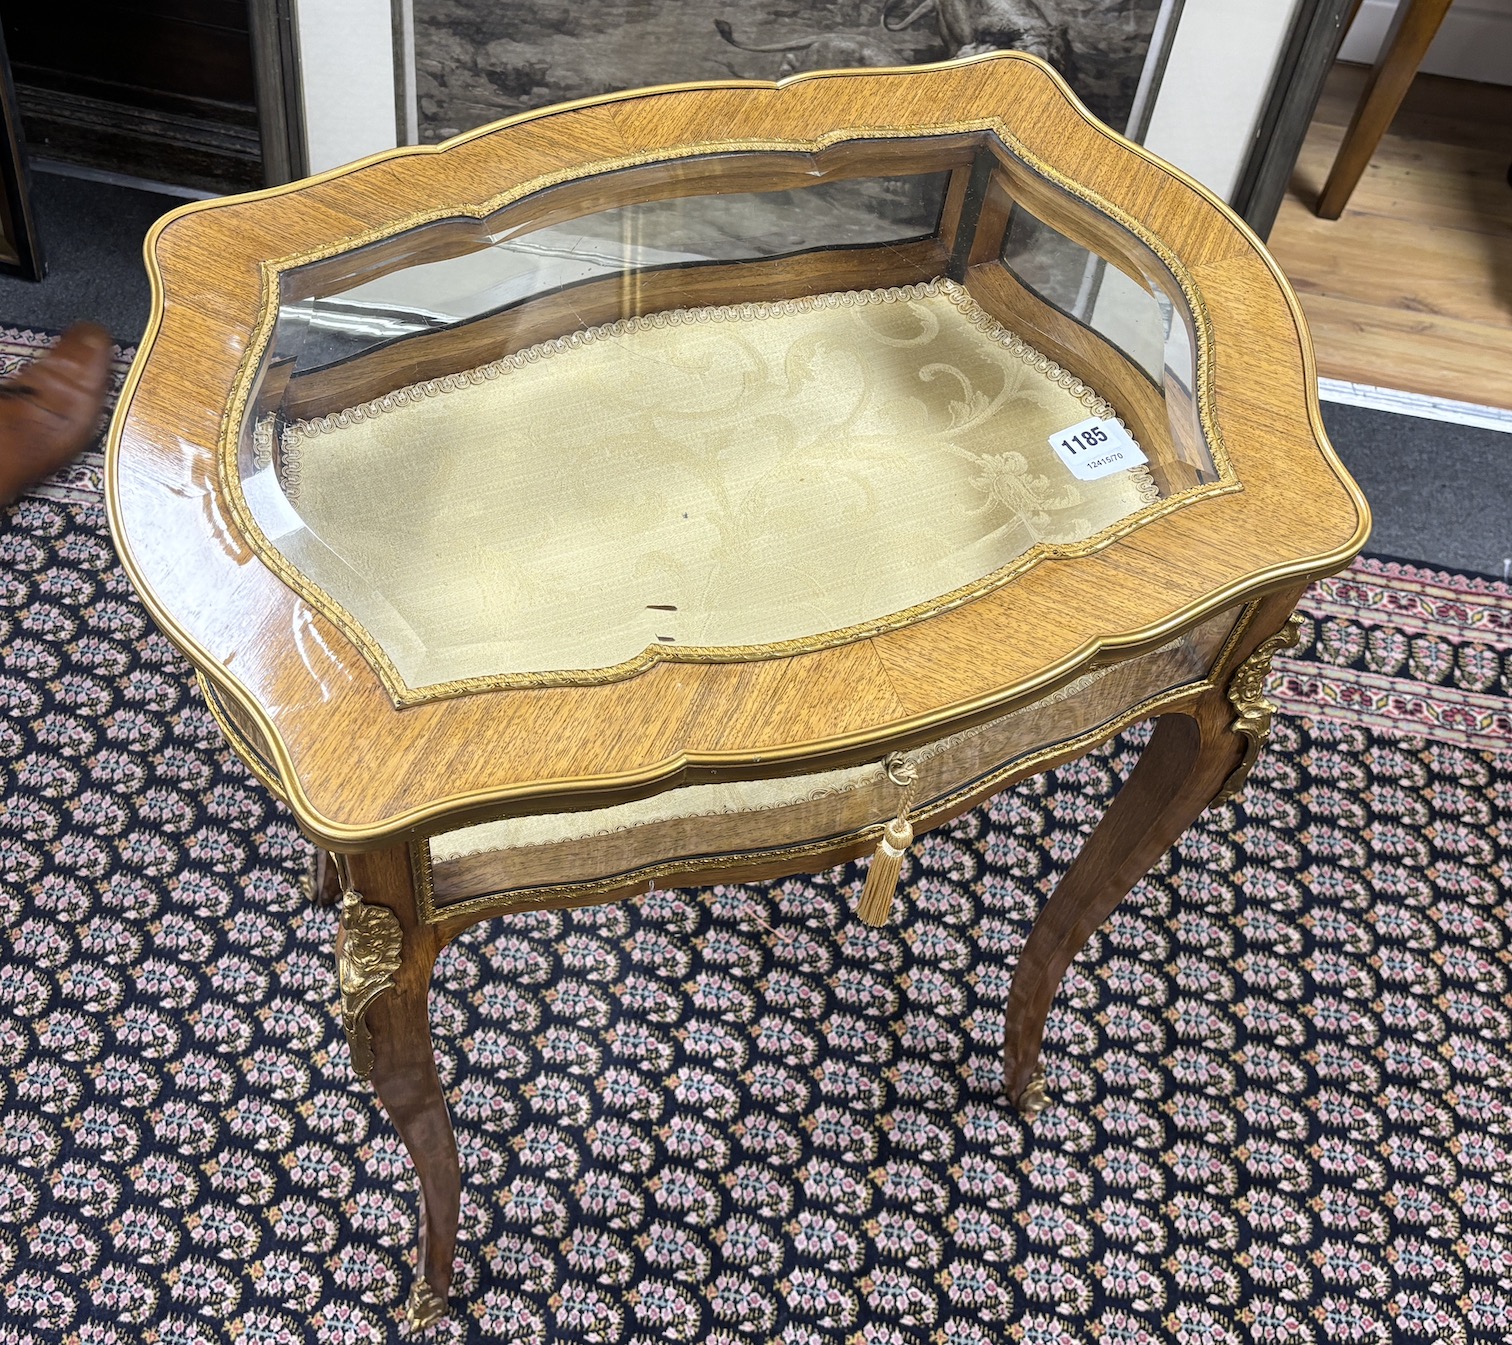 A Louis XVI style kingwood display table, width 64cm, depth 45cm, height 80cm